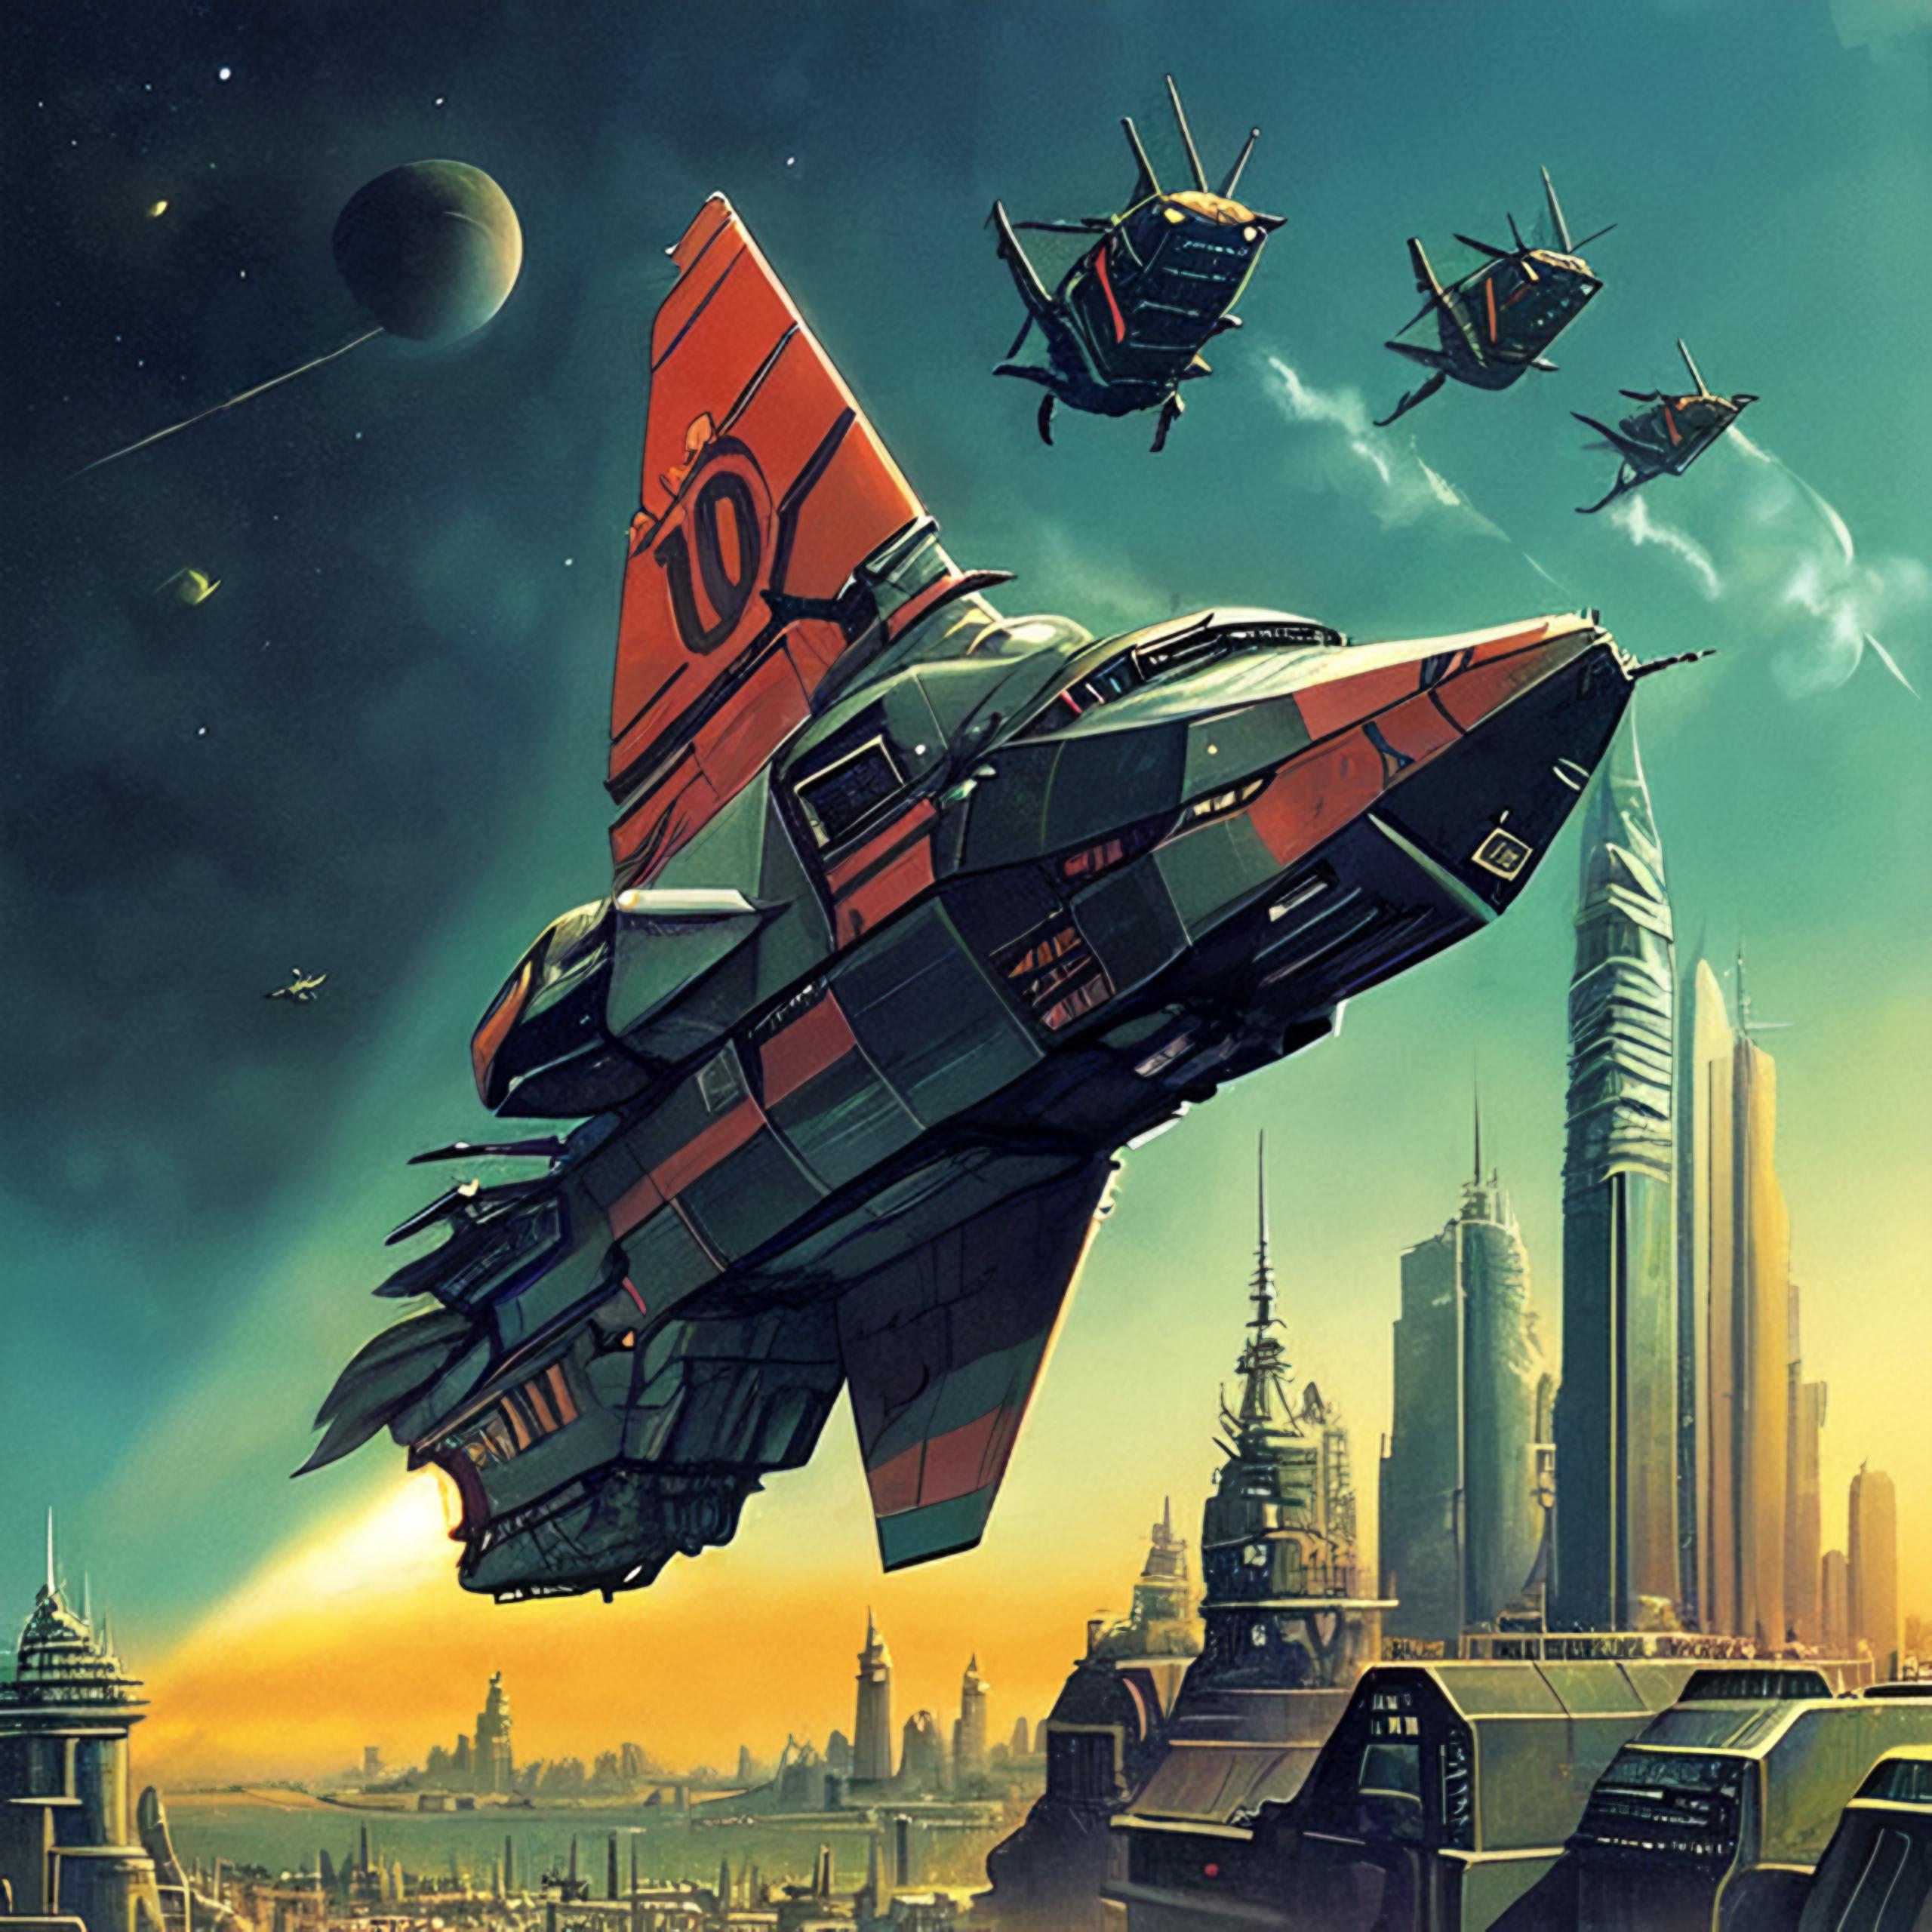 Retro Spaceships image by lawine